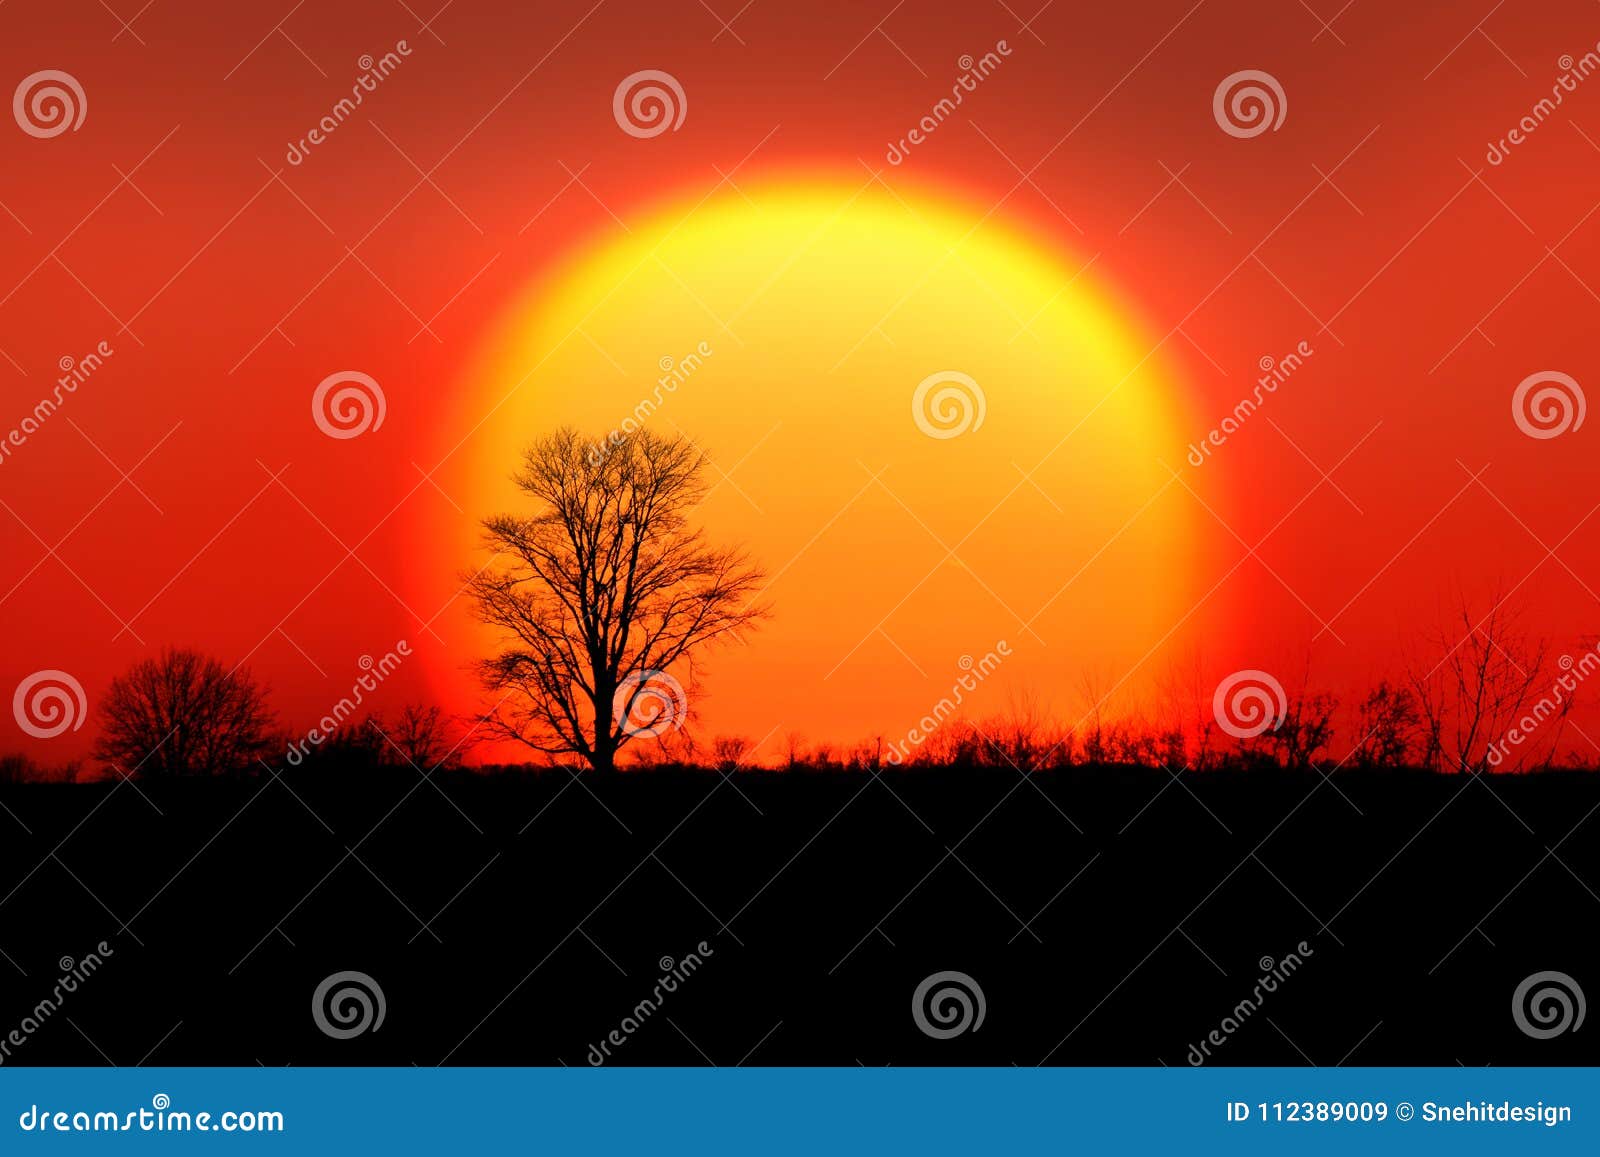 single tree against sun rise back drop